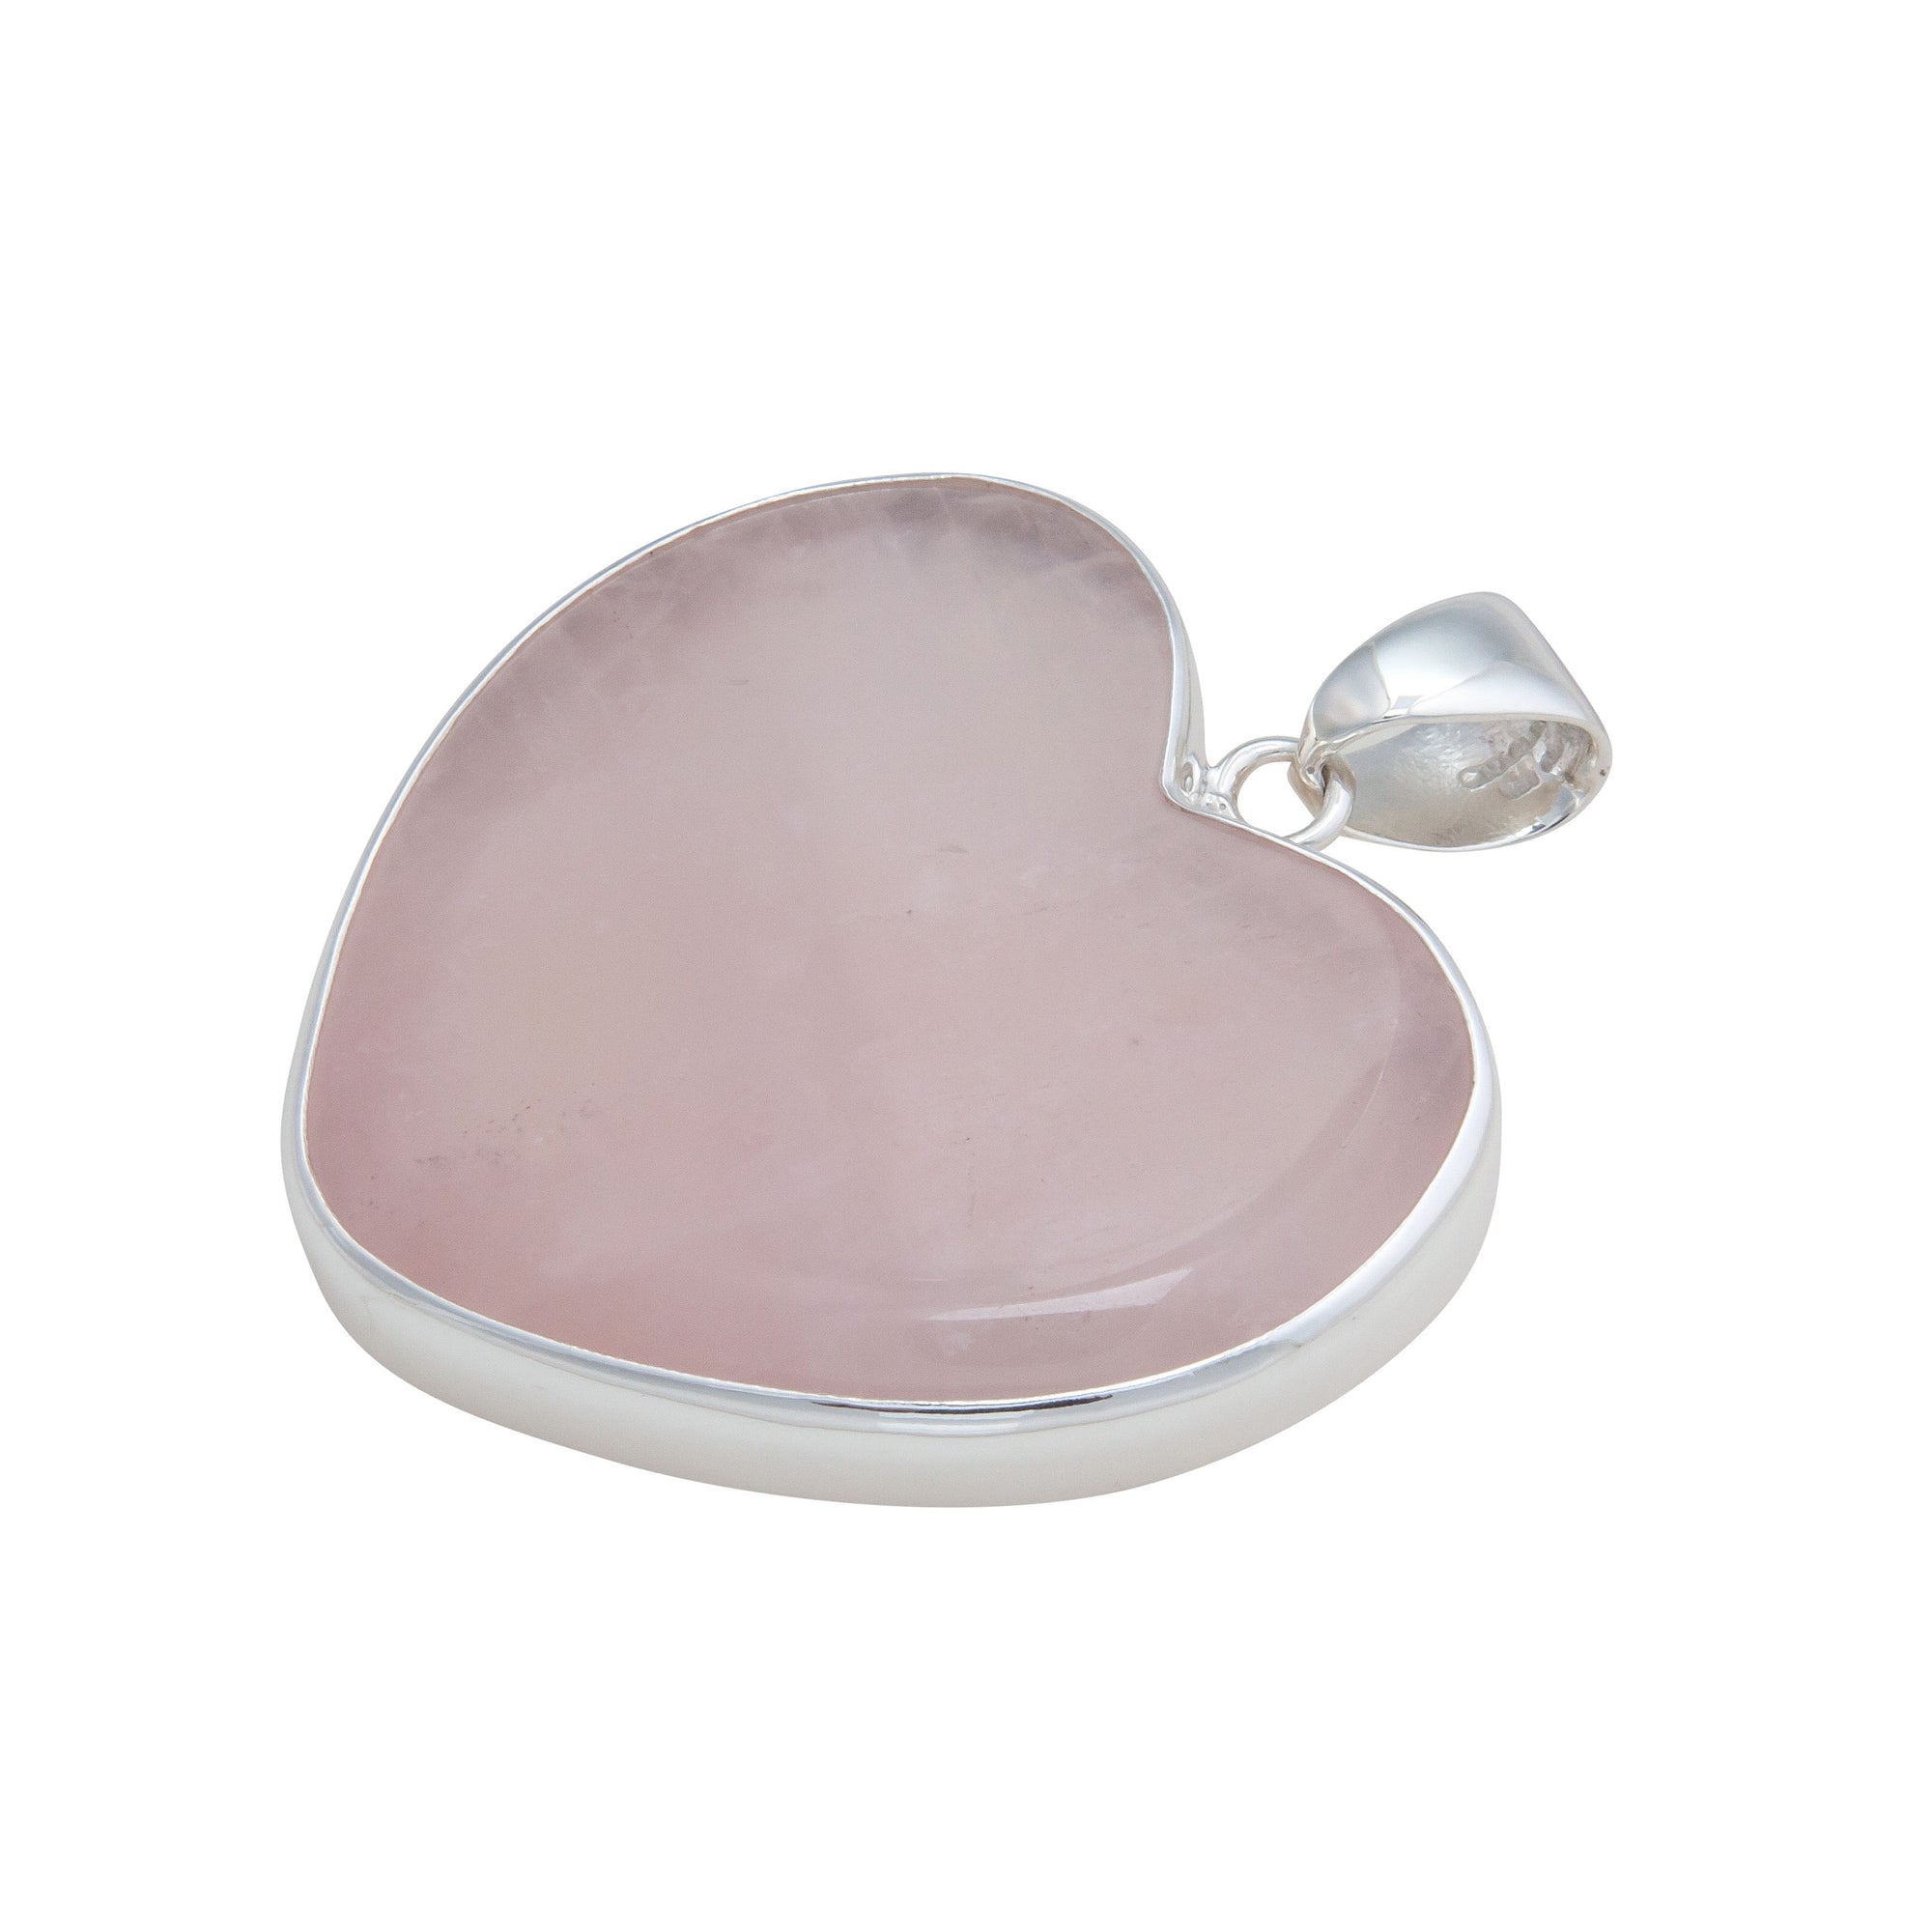 Sterling Silver Rose Quartz Heart Pendant - Large | Charles Albert Jewelry